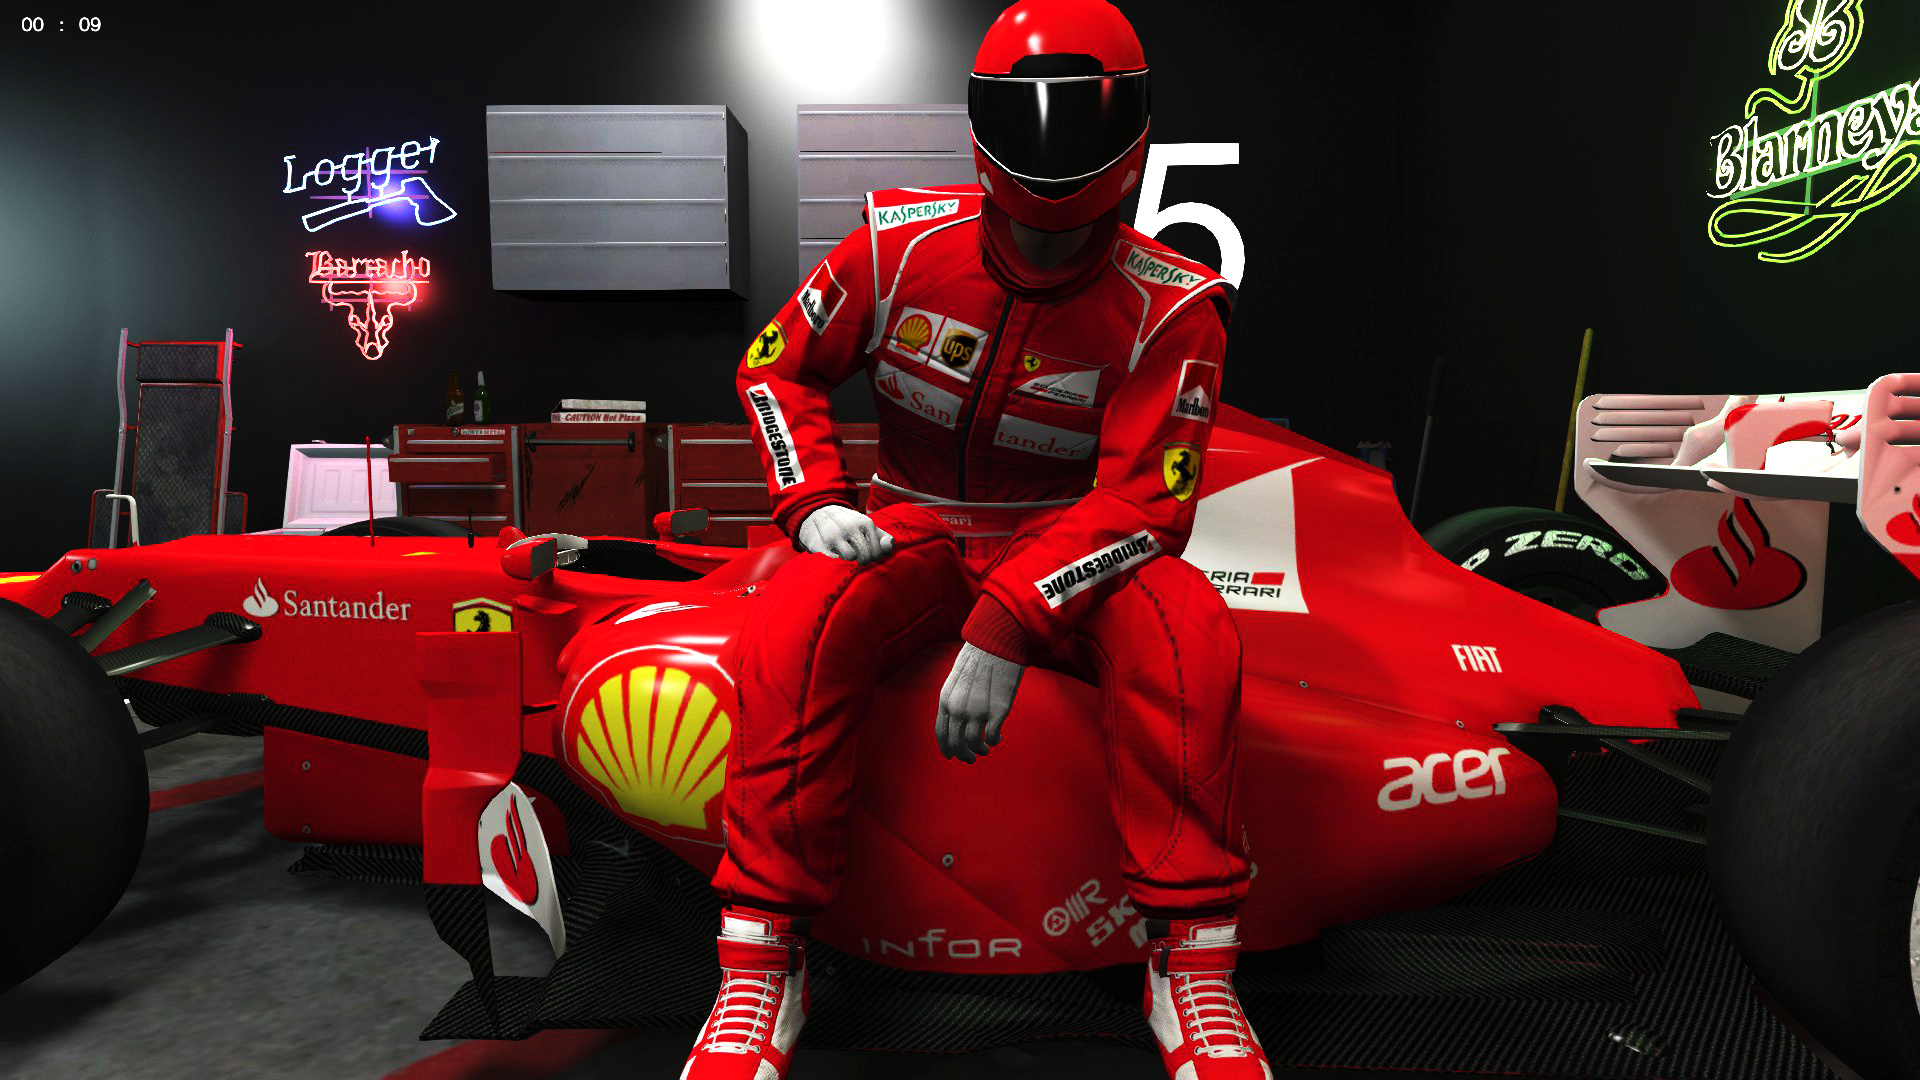 Ferrari Racing Suit | vlr.eng.br